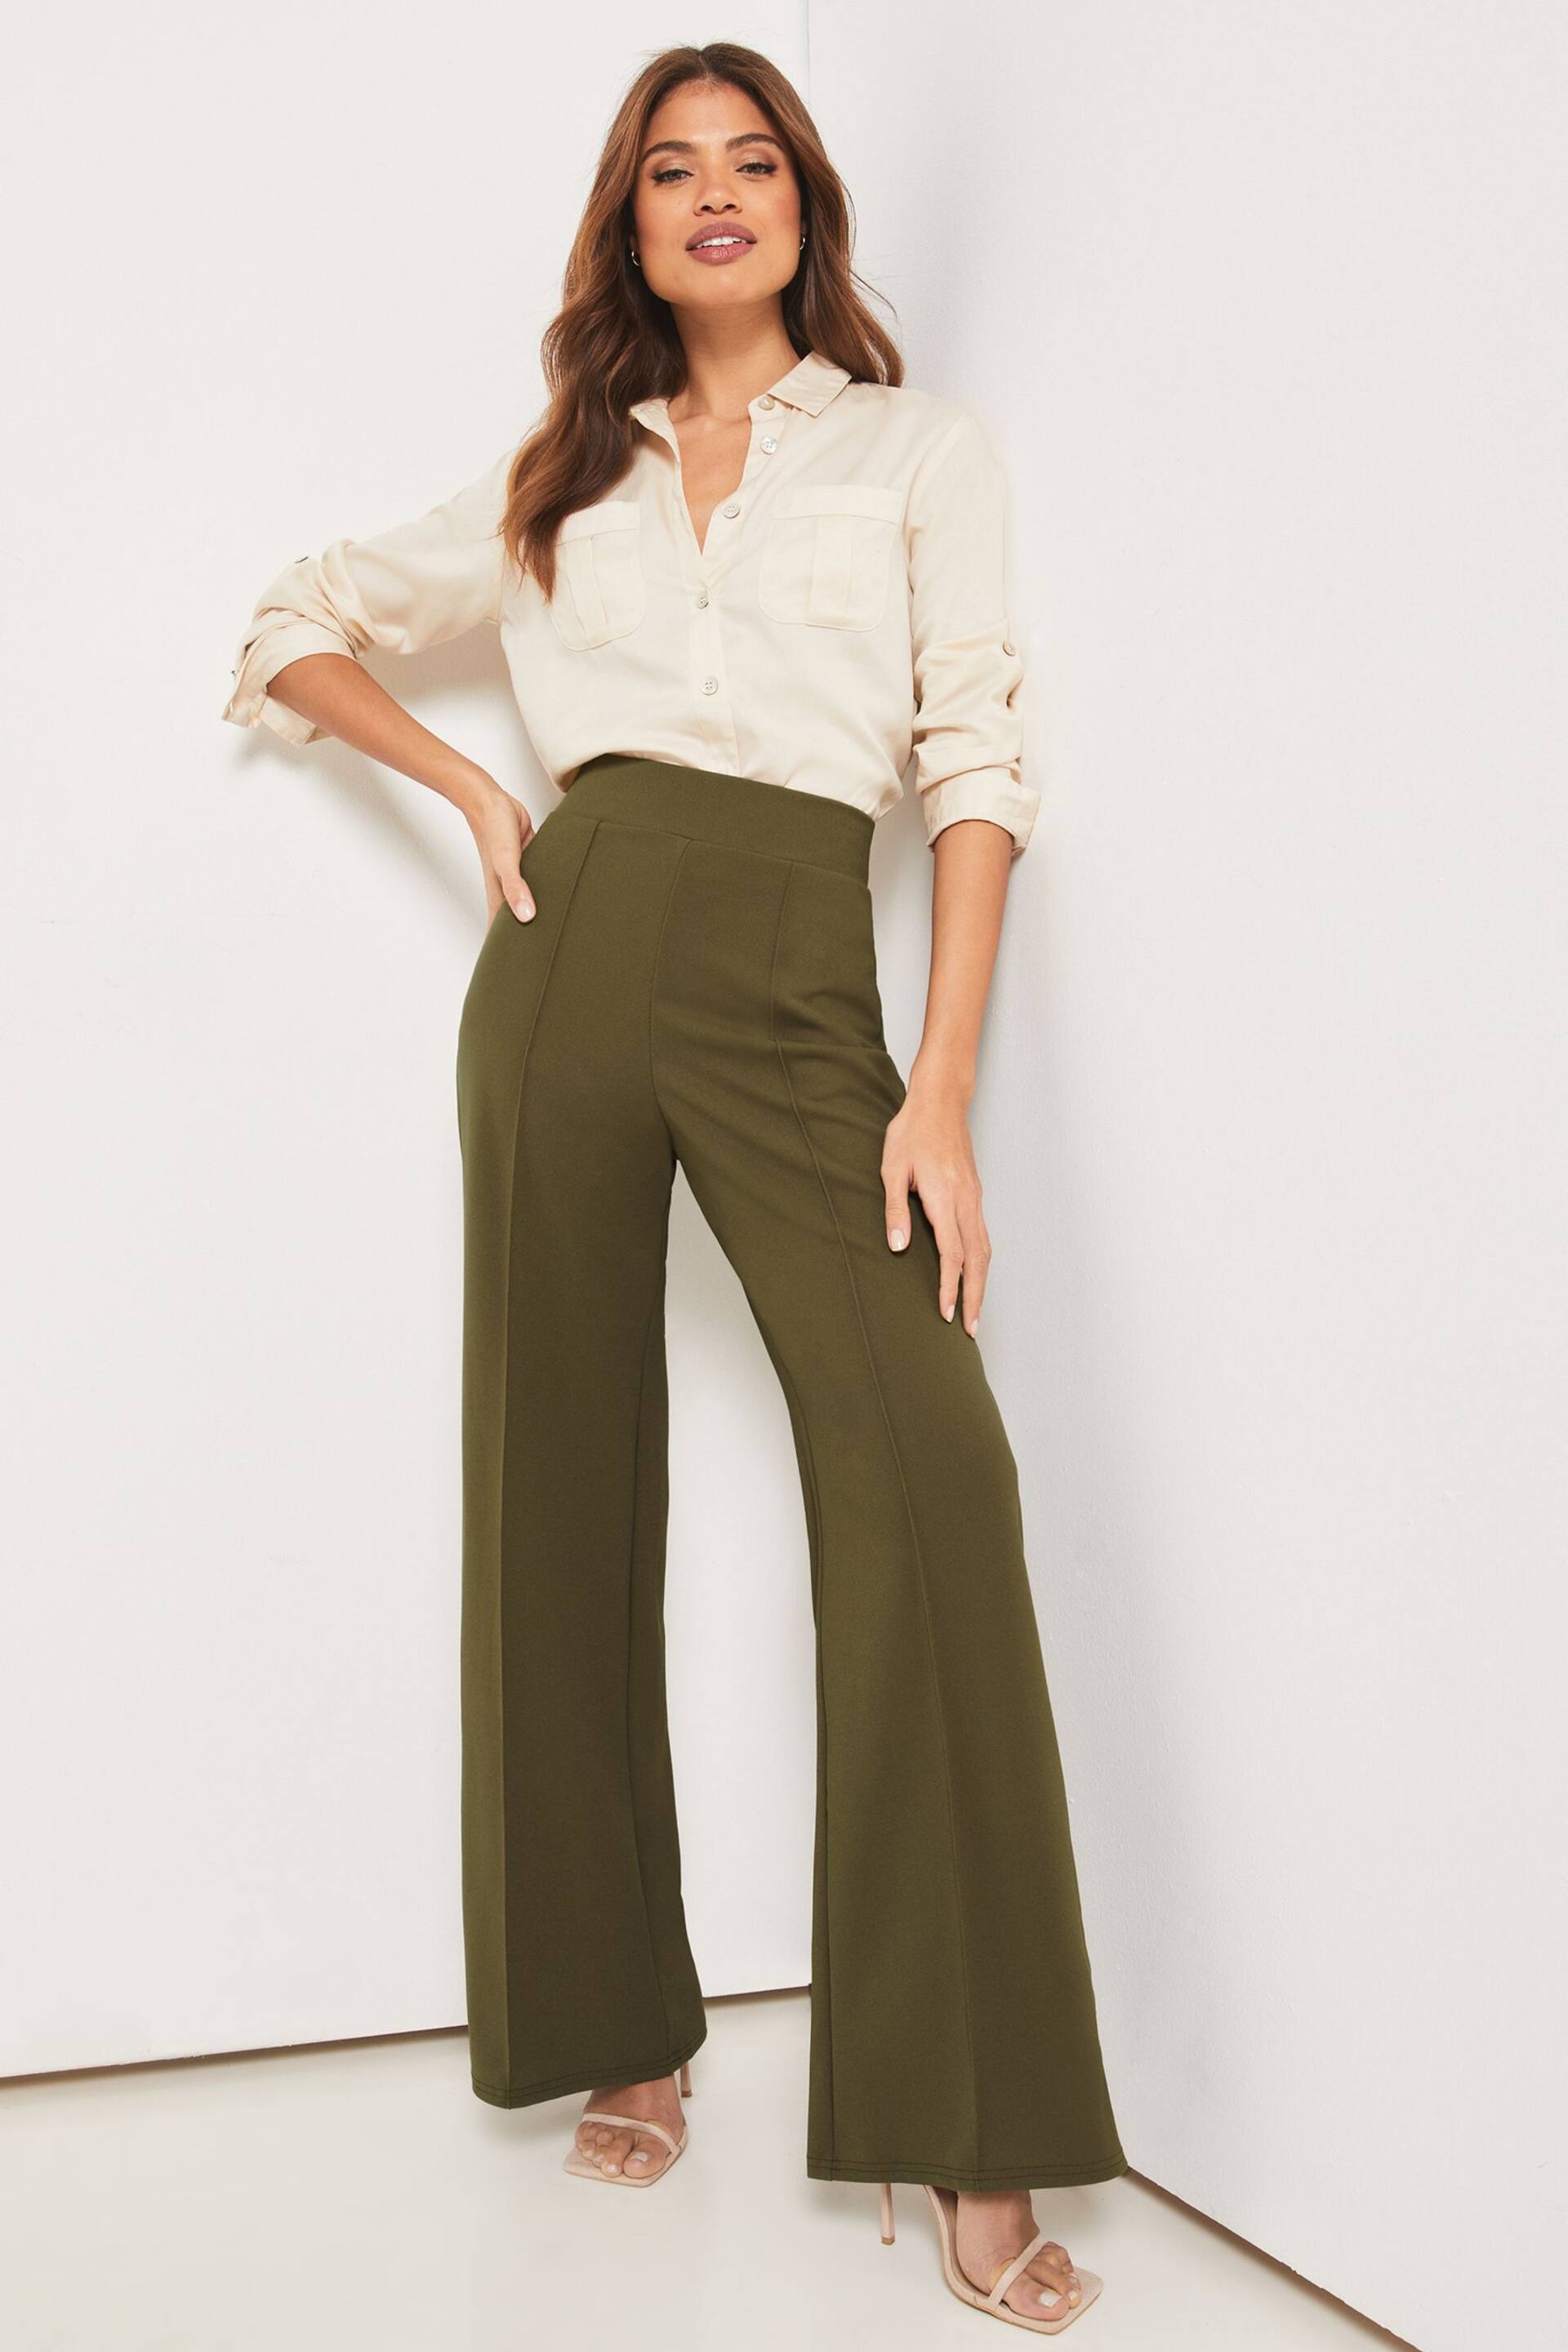 Lipsy Khaki Green Twill High Waist Wide Leg Tailored Trousers - Image 3 of 4